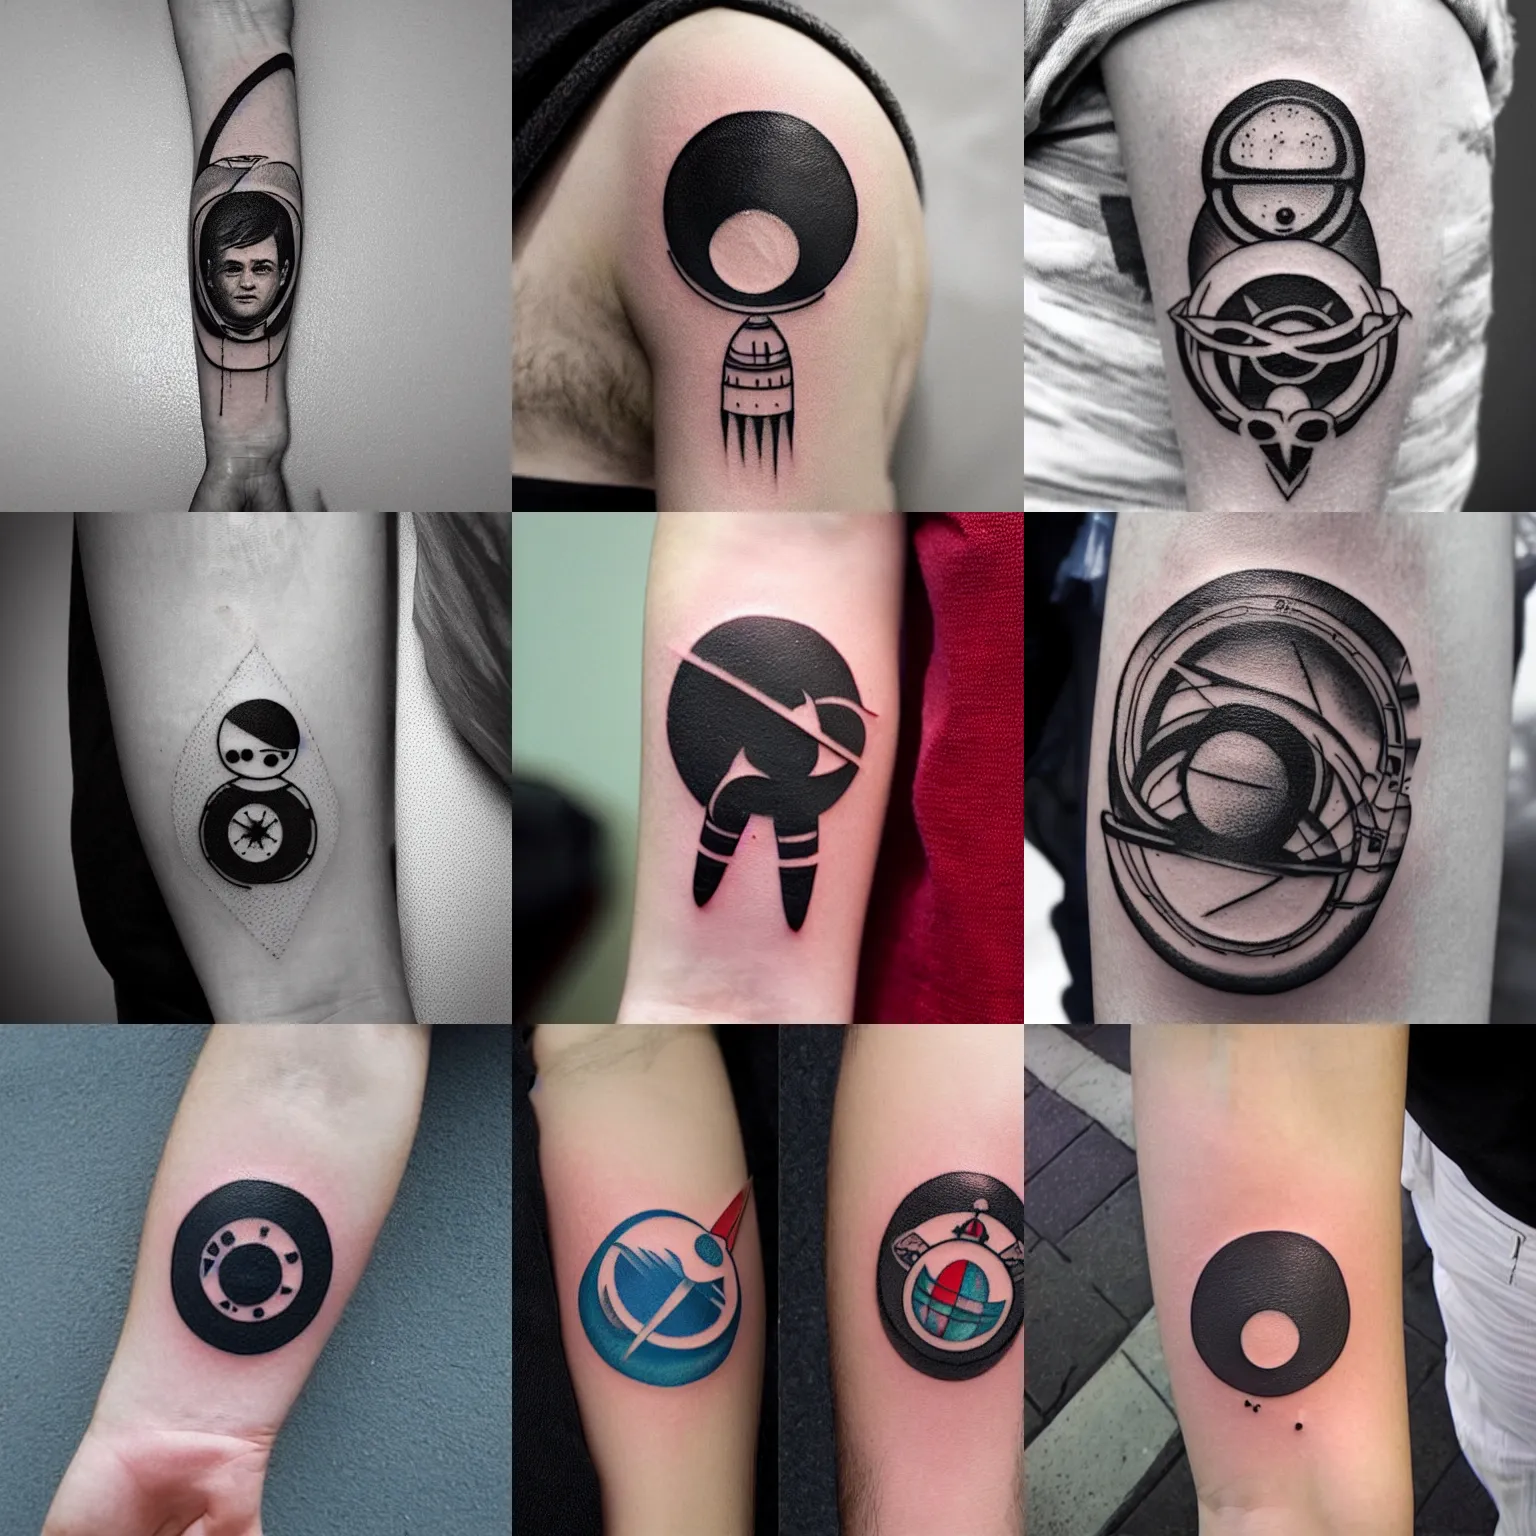 20 little minimalist tattoos for men and women - ❤️ Онлайн блог о тату  IdeasTattoo